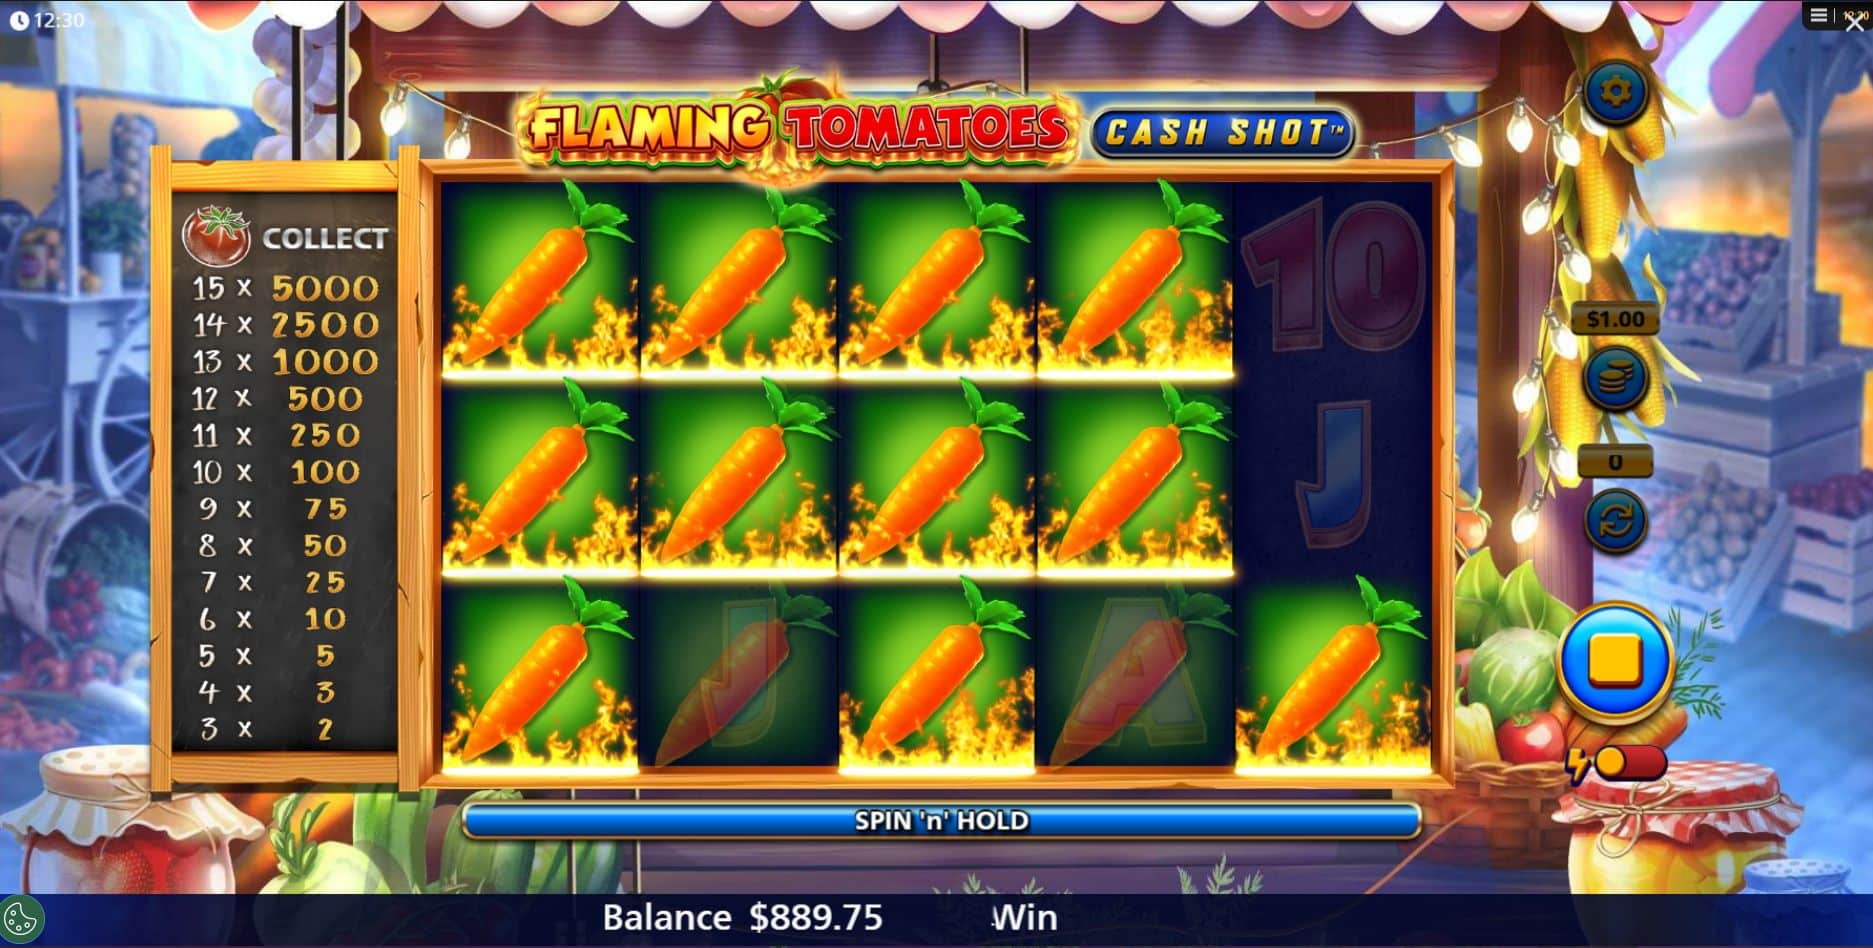 Flaming Tomatoes Cash Shot Free Spins